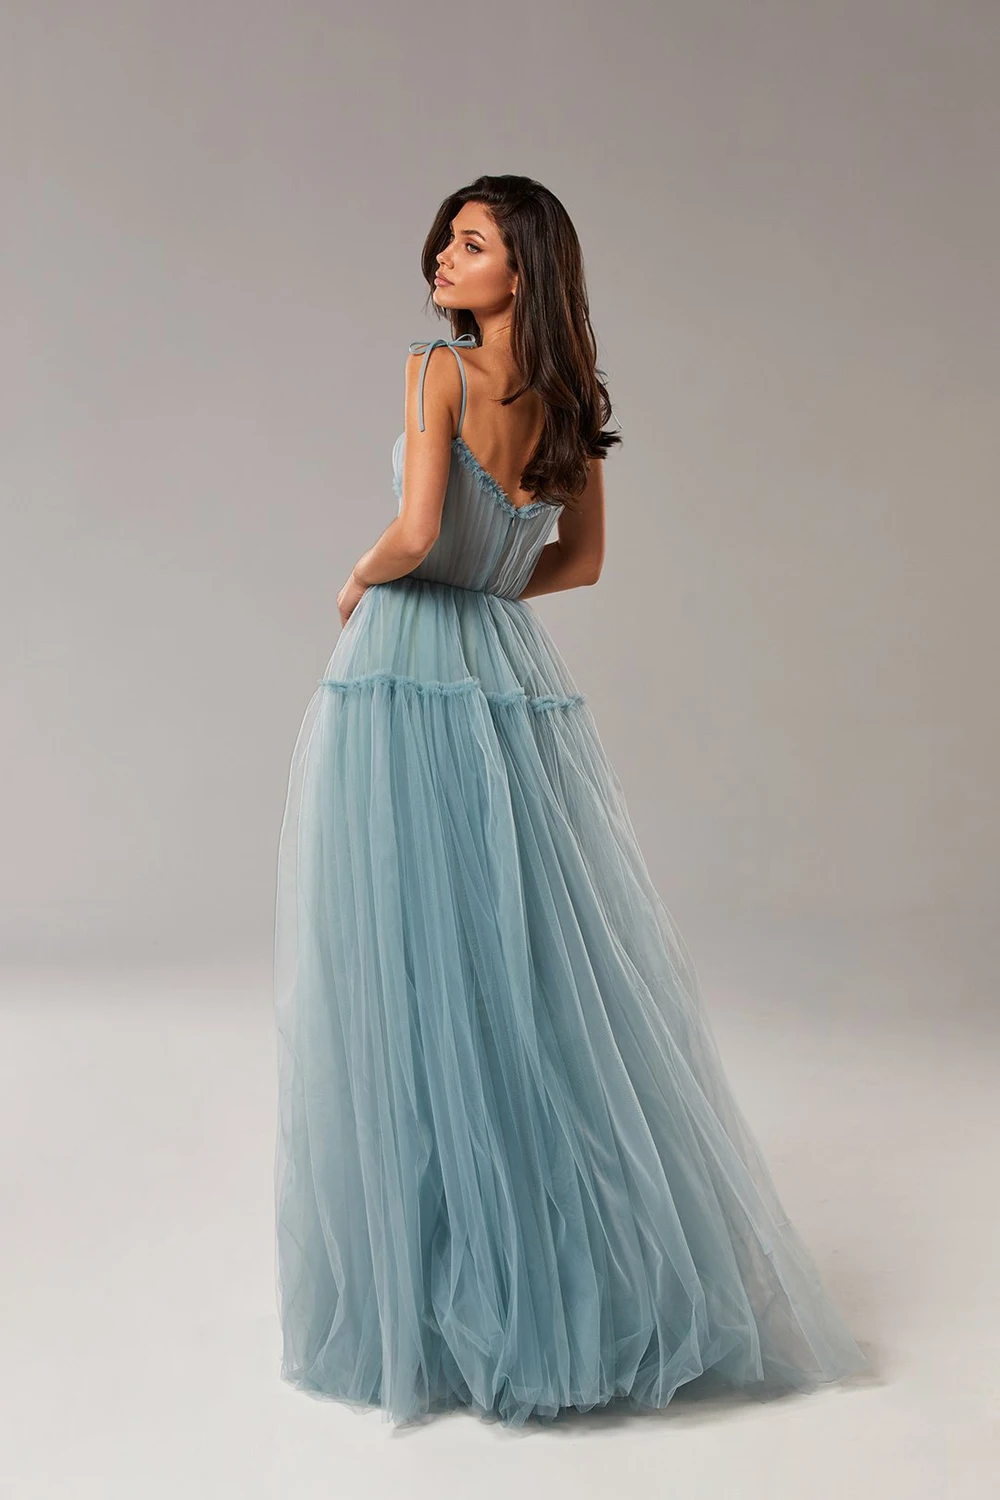 Sevintage Blush Roze/Blauw Lange Prom Dresses 2021 Spaghettibandjes Tiered Rok A-lijn Party Jurken Plisse Tulle Formele Gowns